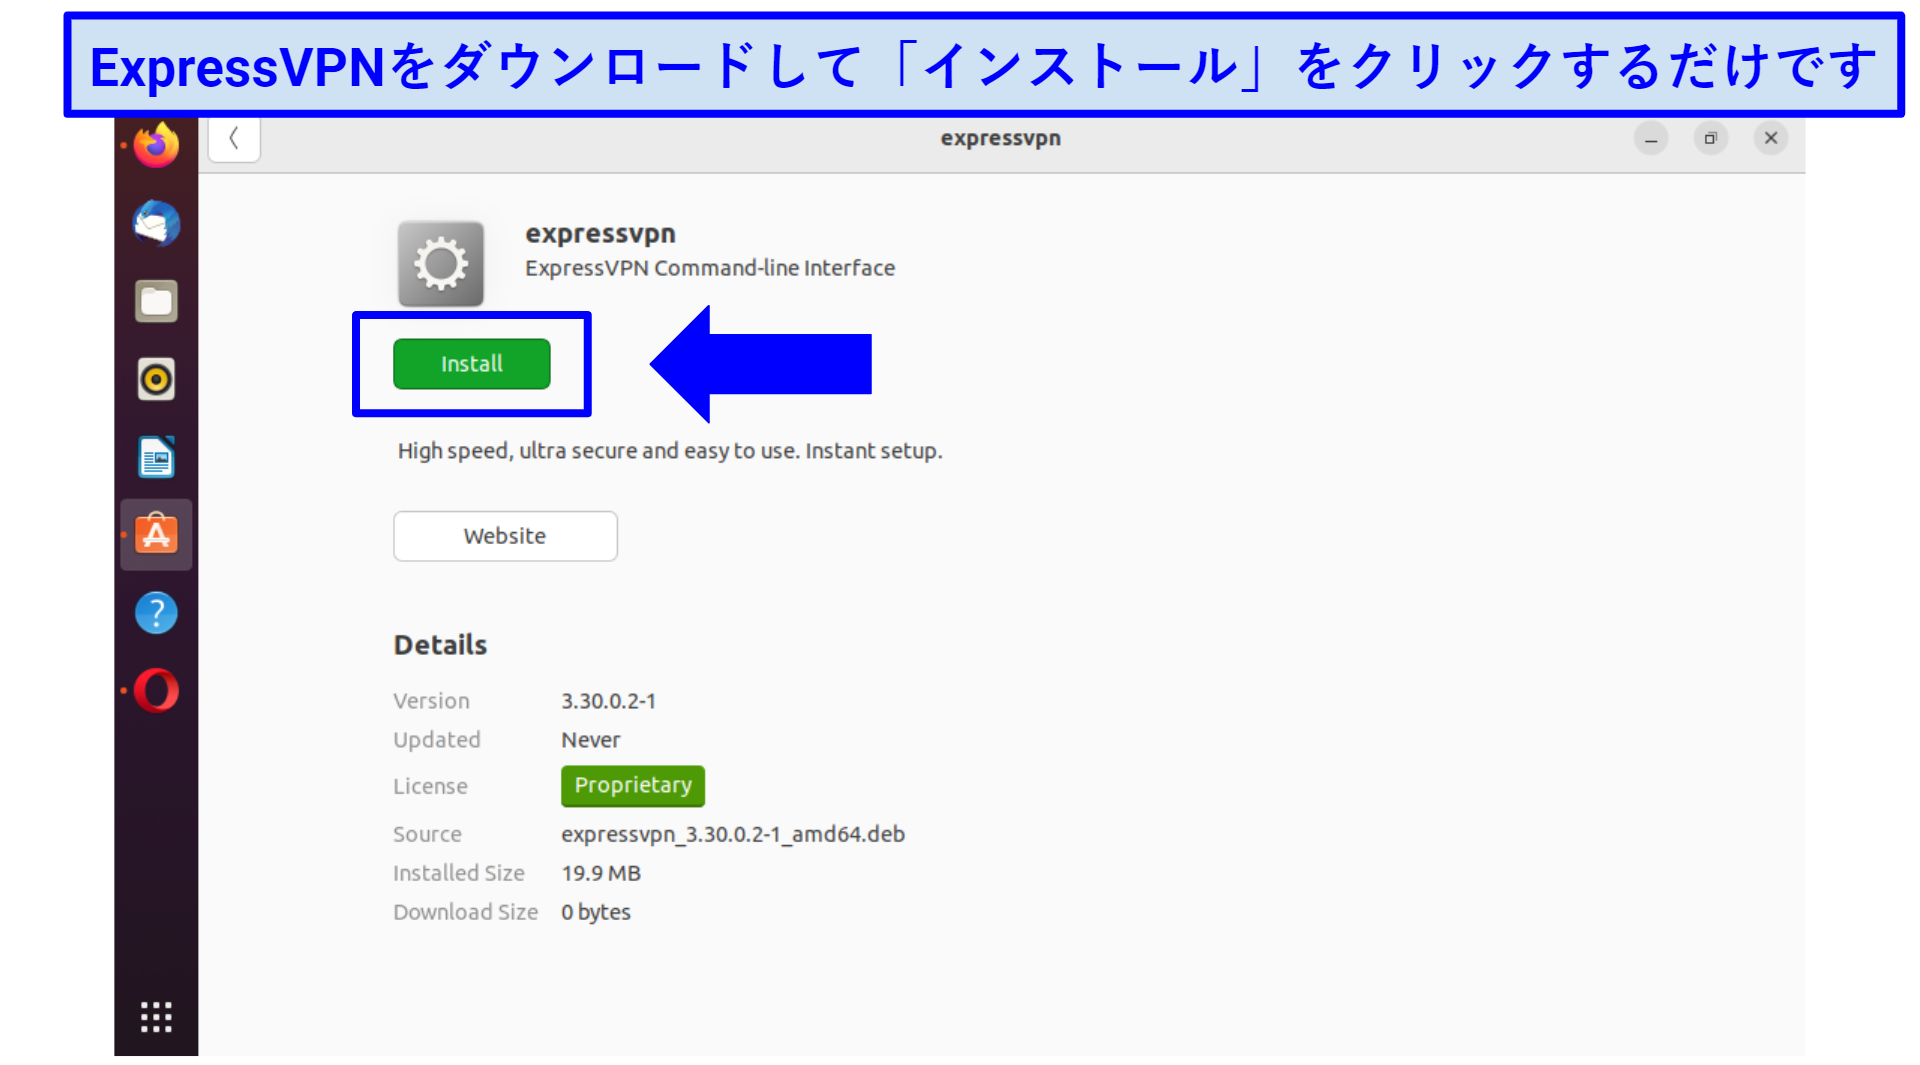 Screenshot of ExpressVPN download file for Linux on a device using Ubuntu